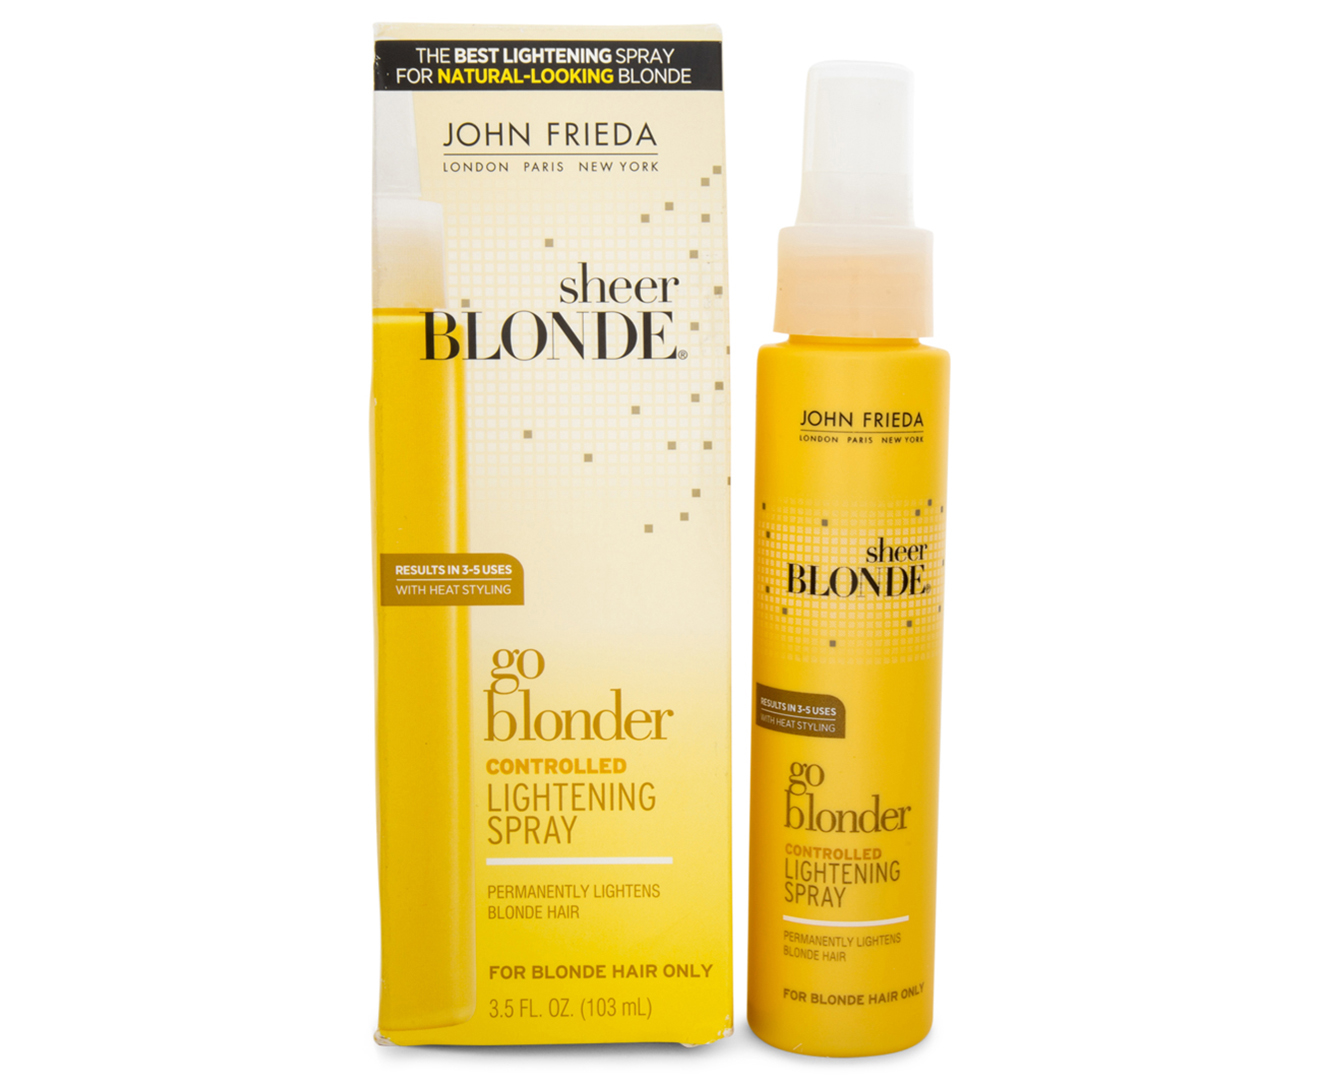 2. John Frieda Sheer Blonde Go Blonder Lightening Spray - wide 2